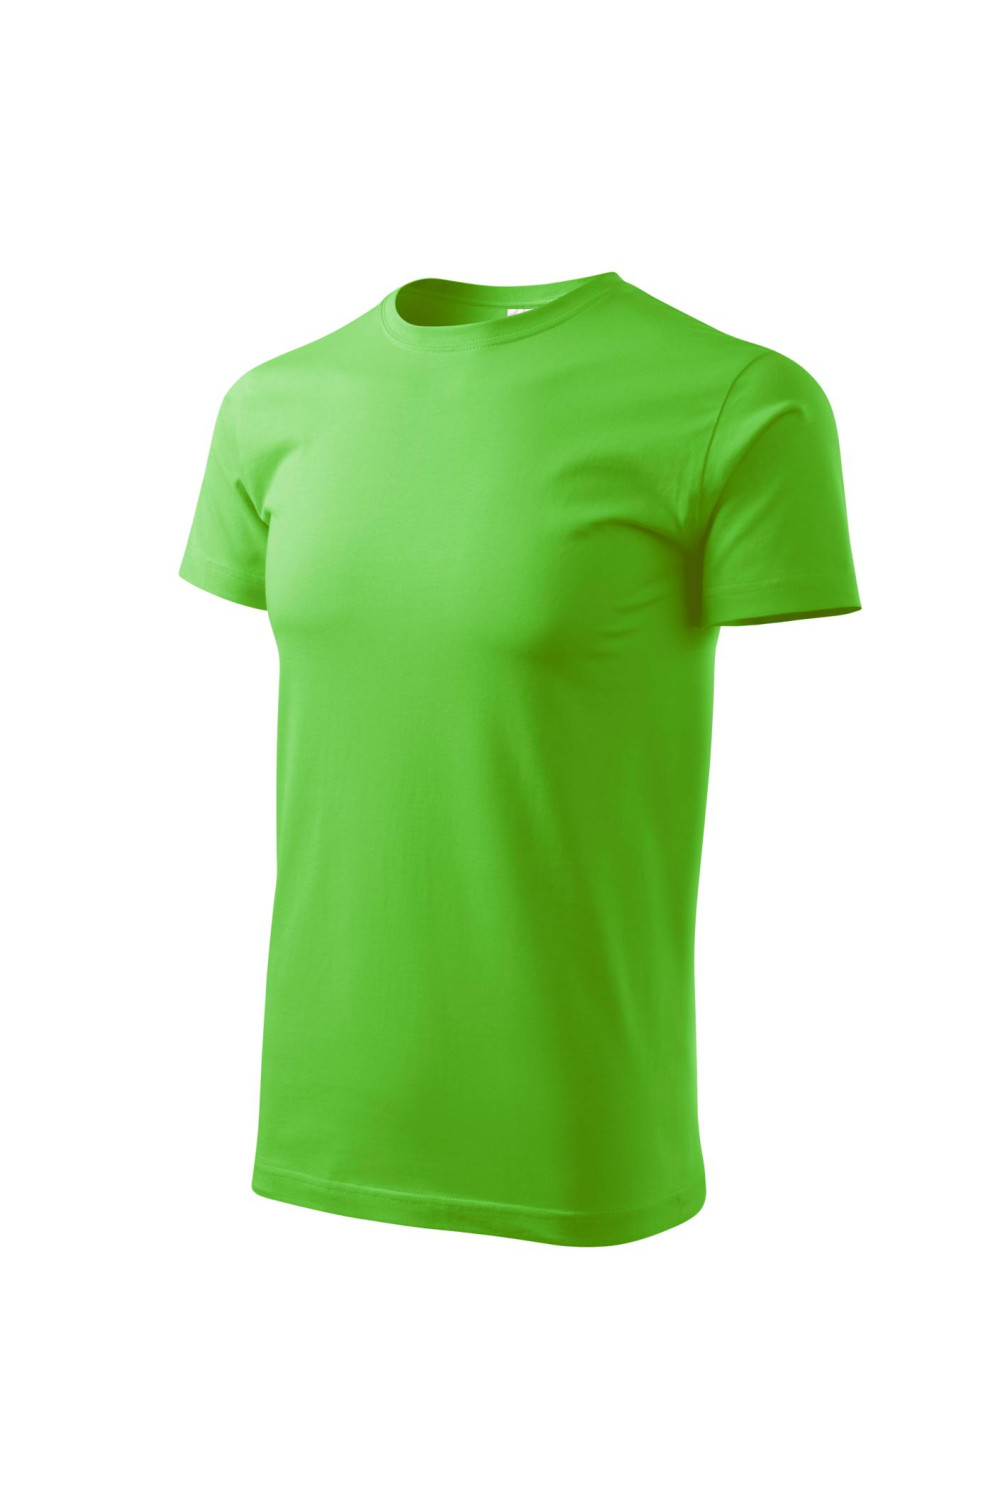 Koszulka męska 100% bawełna BASIC 129  kolor green apple